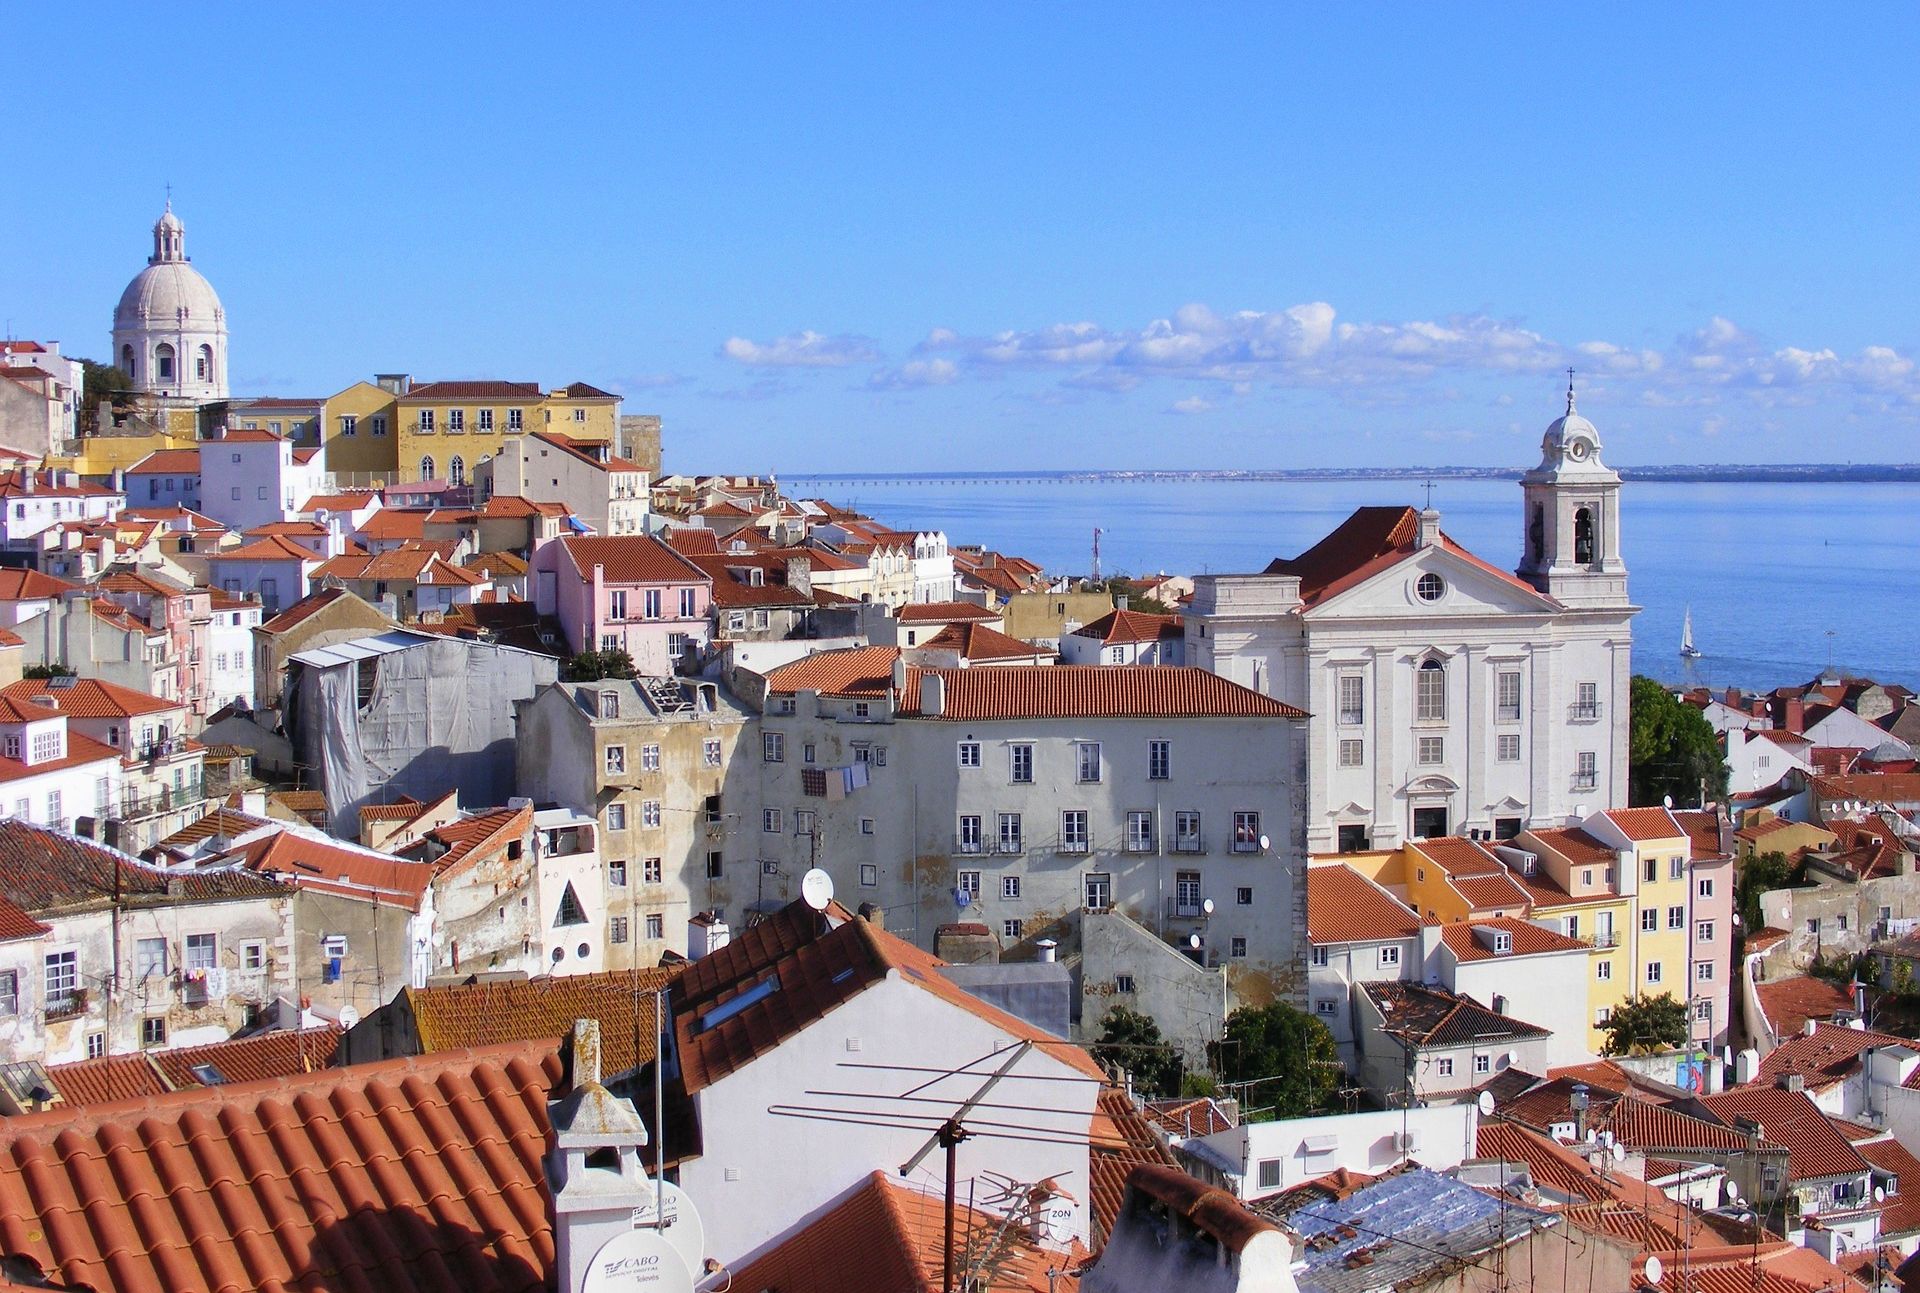 Alfama in Lisbon, Portugal